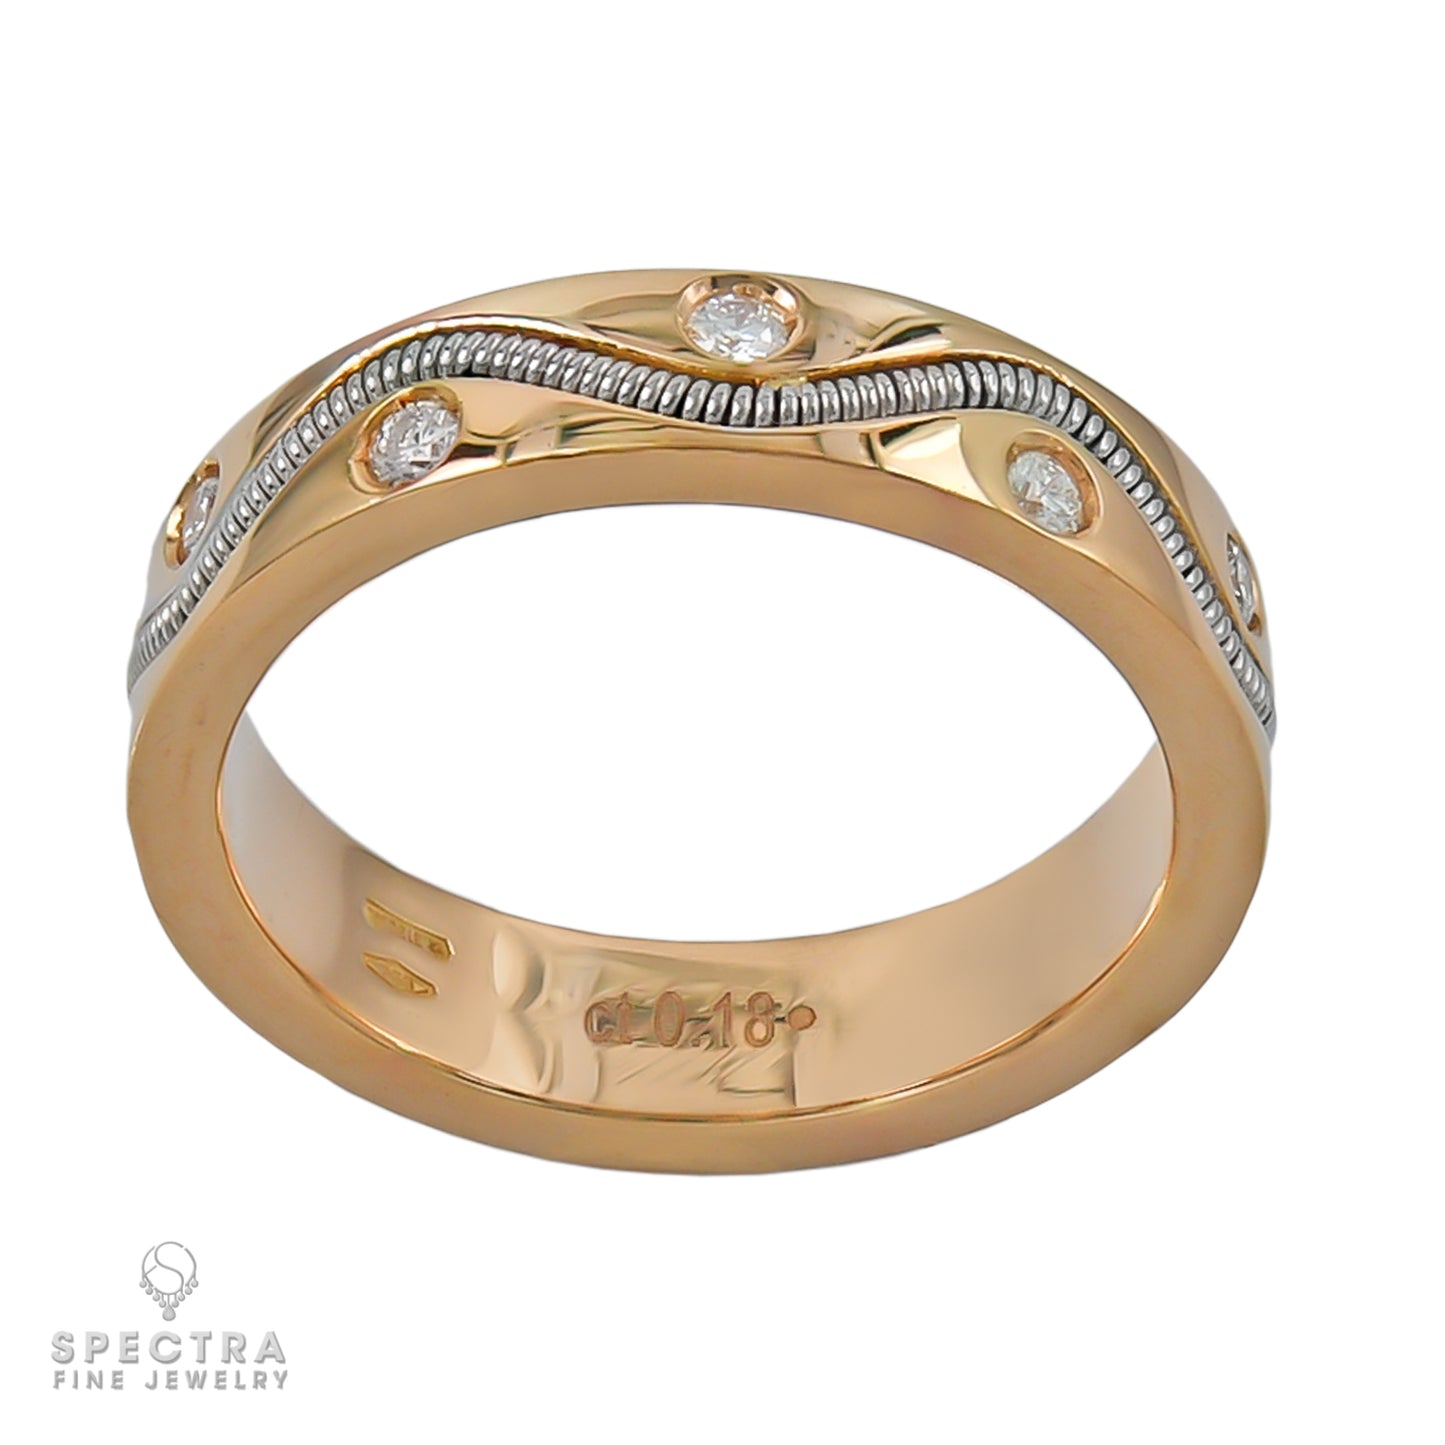 Crivelli 18 Karat Gold Eight Diamond Ring or Wedding Band